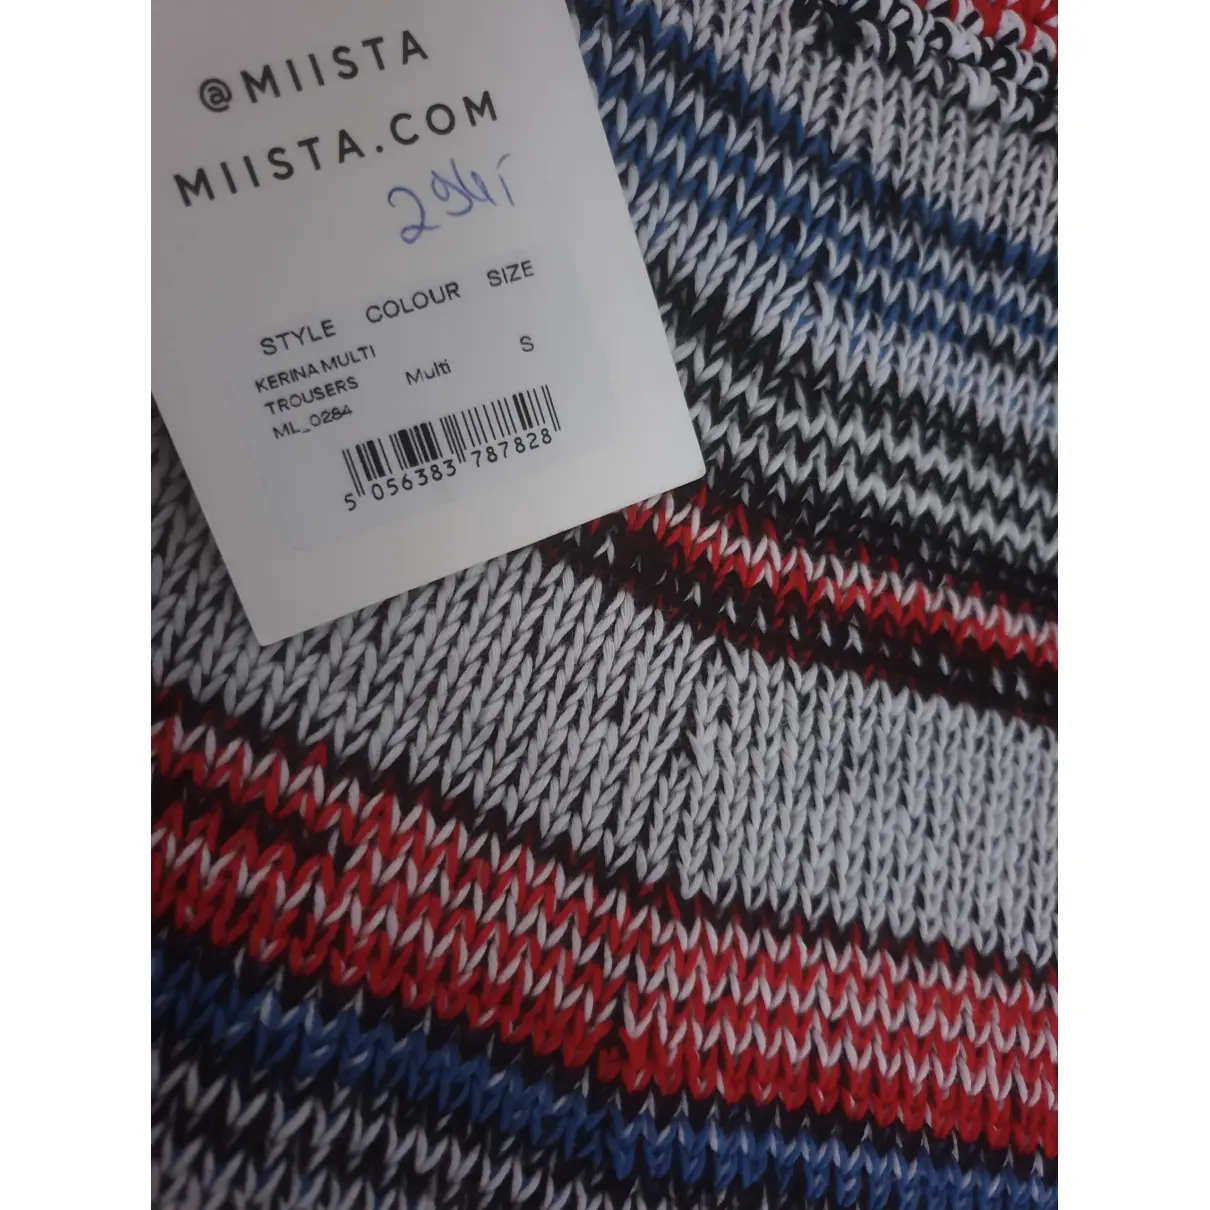 Buy Miista Large pants online